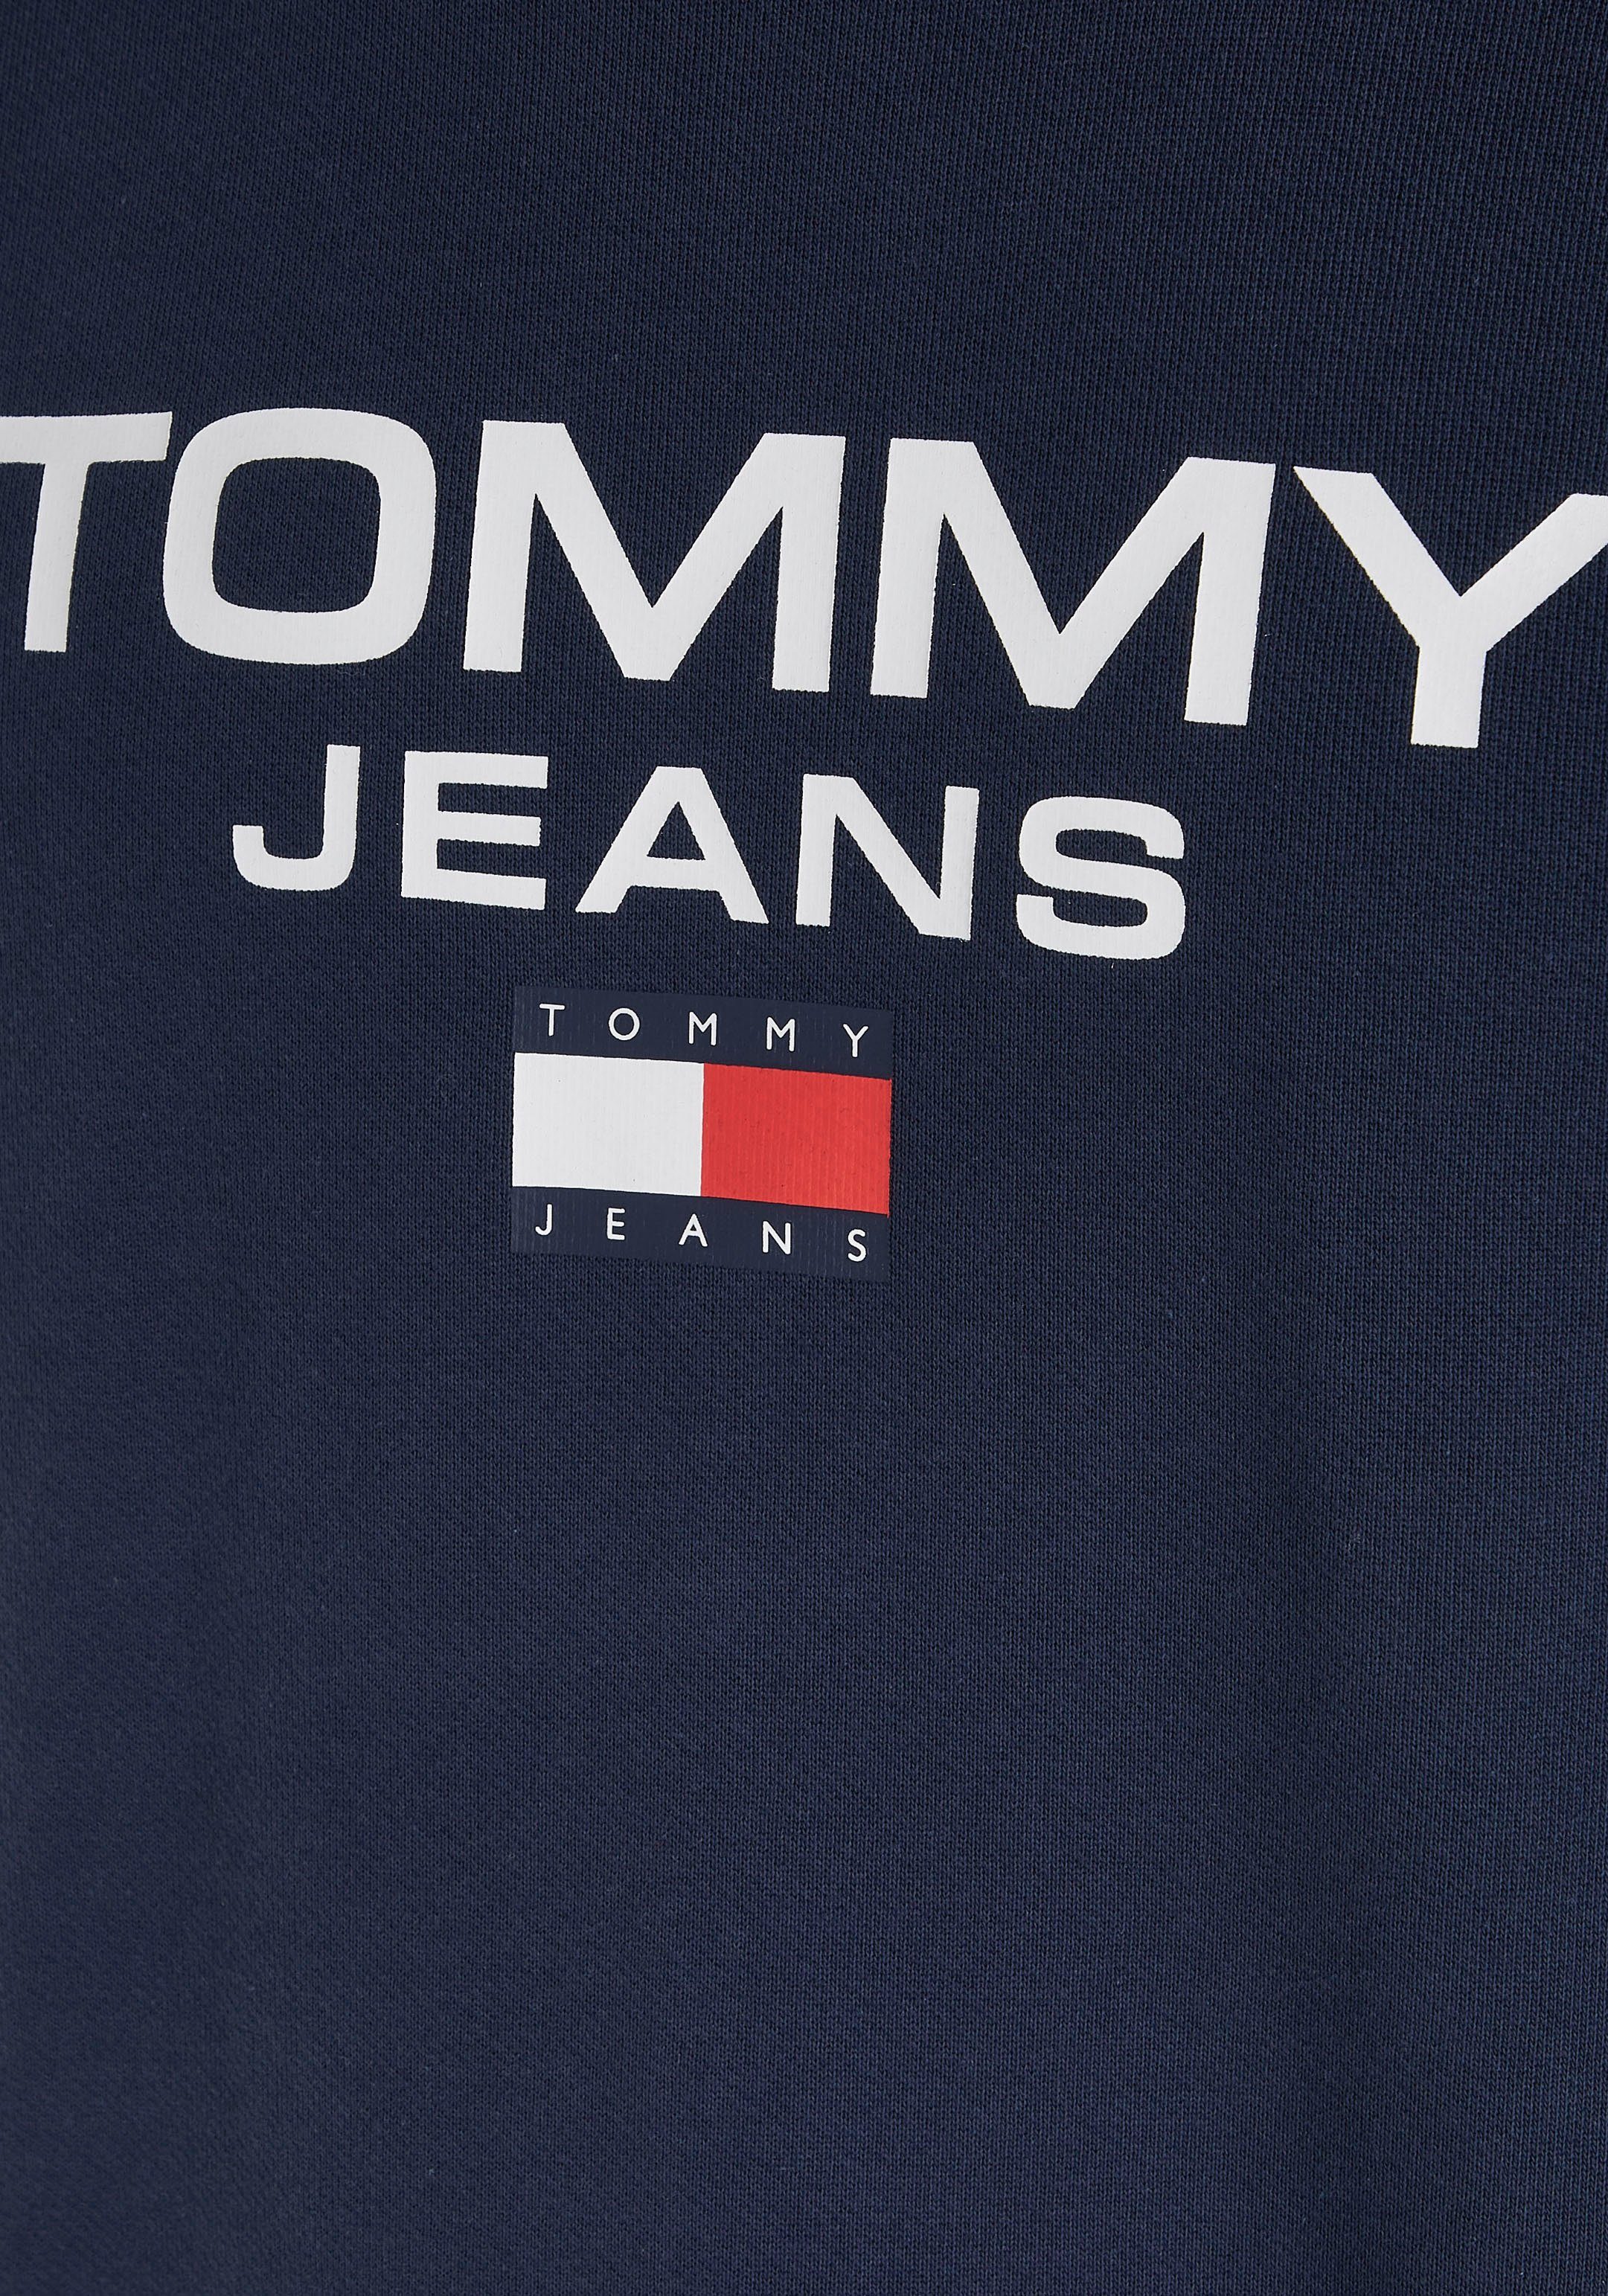 Navy Jeans Twilight Sweatshirt REG CREW Tommy mit TJM Logodruck ENTRY